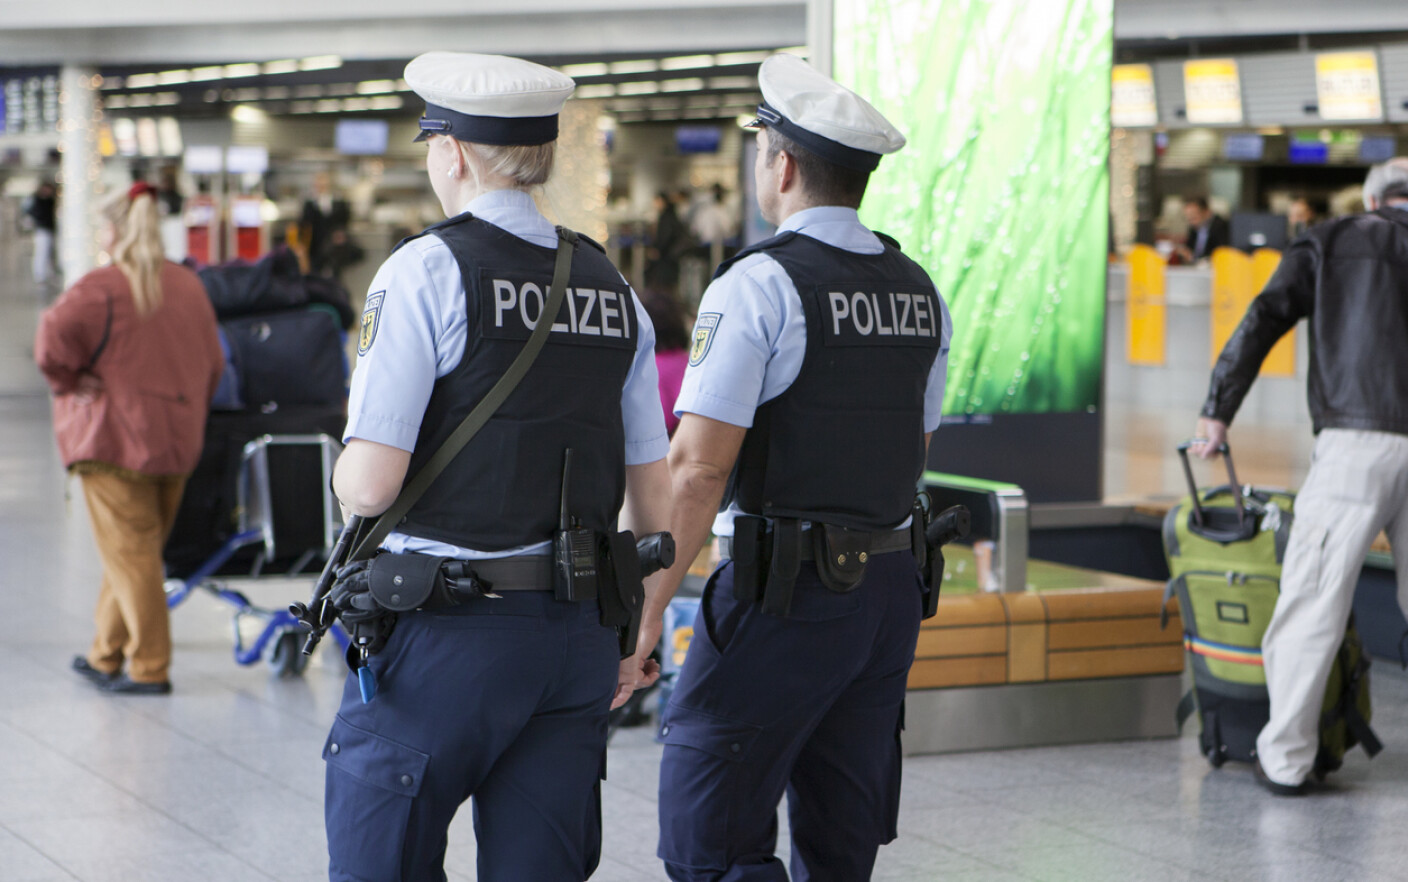 Politie germania